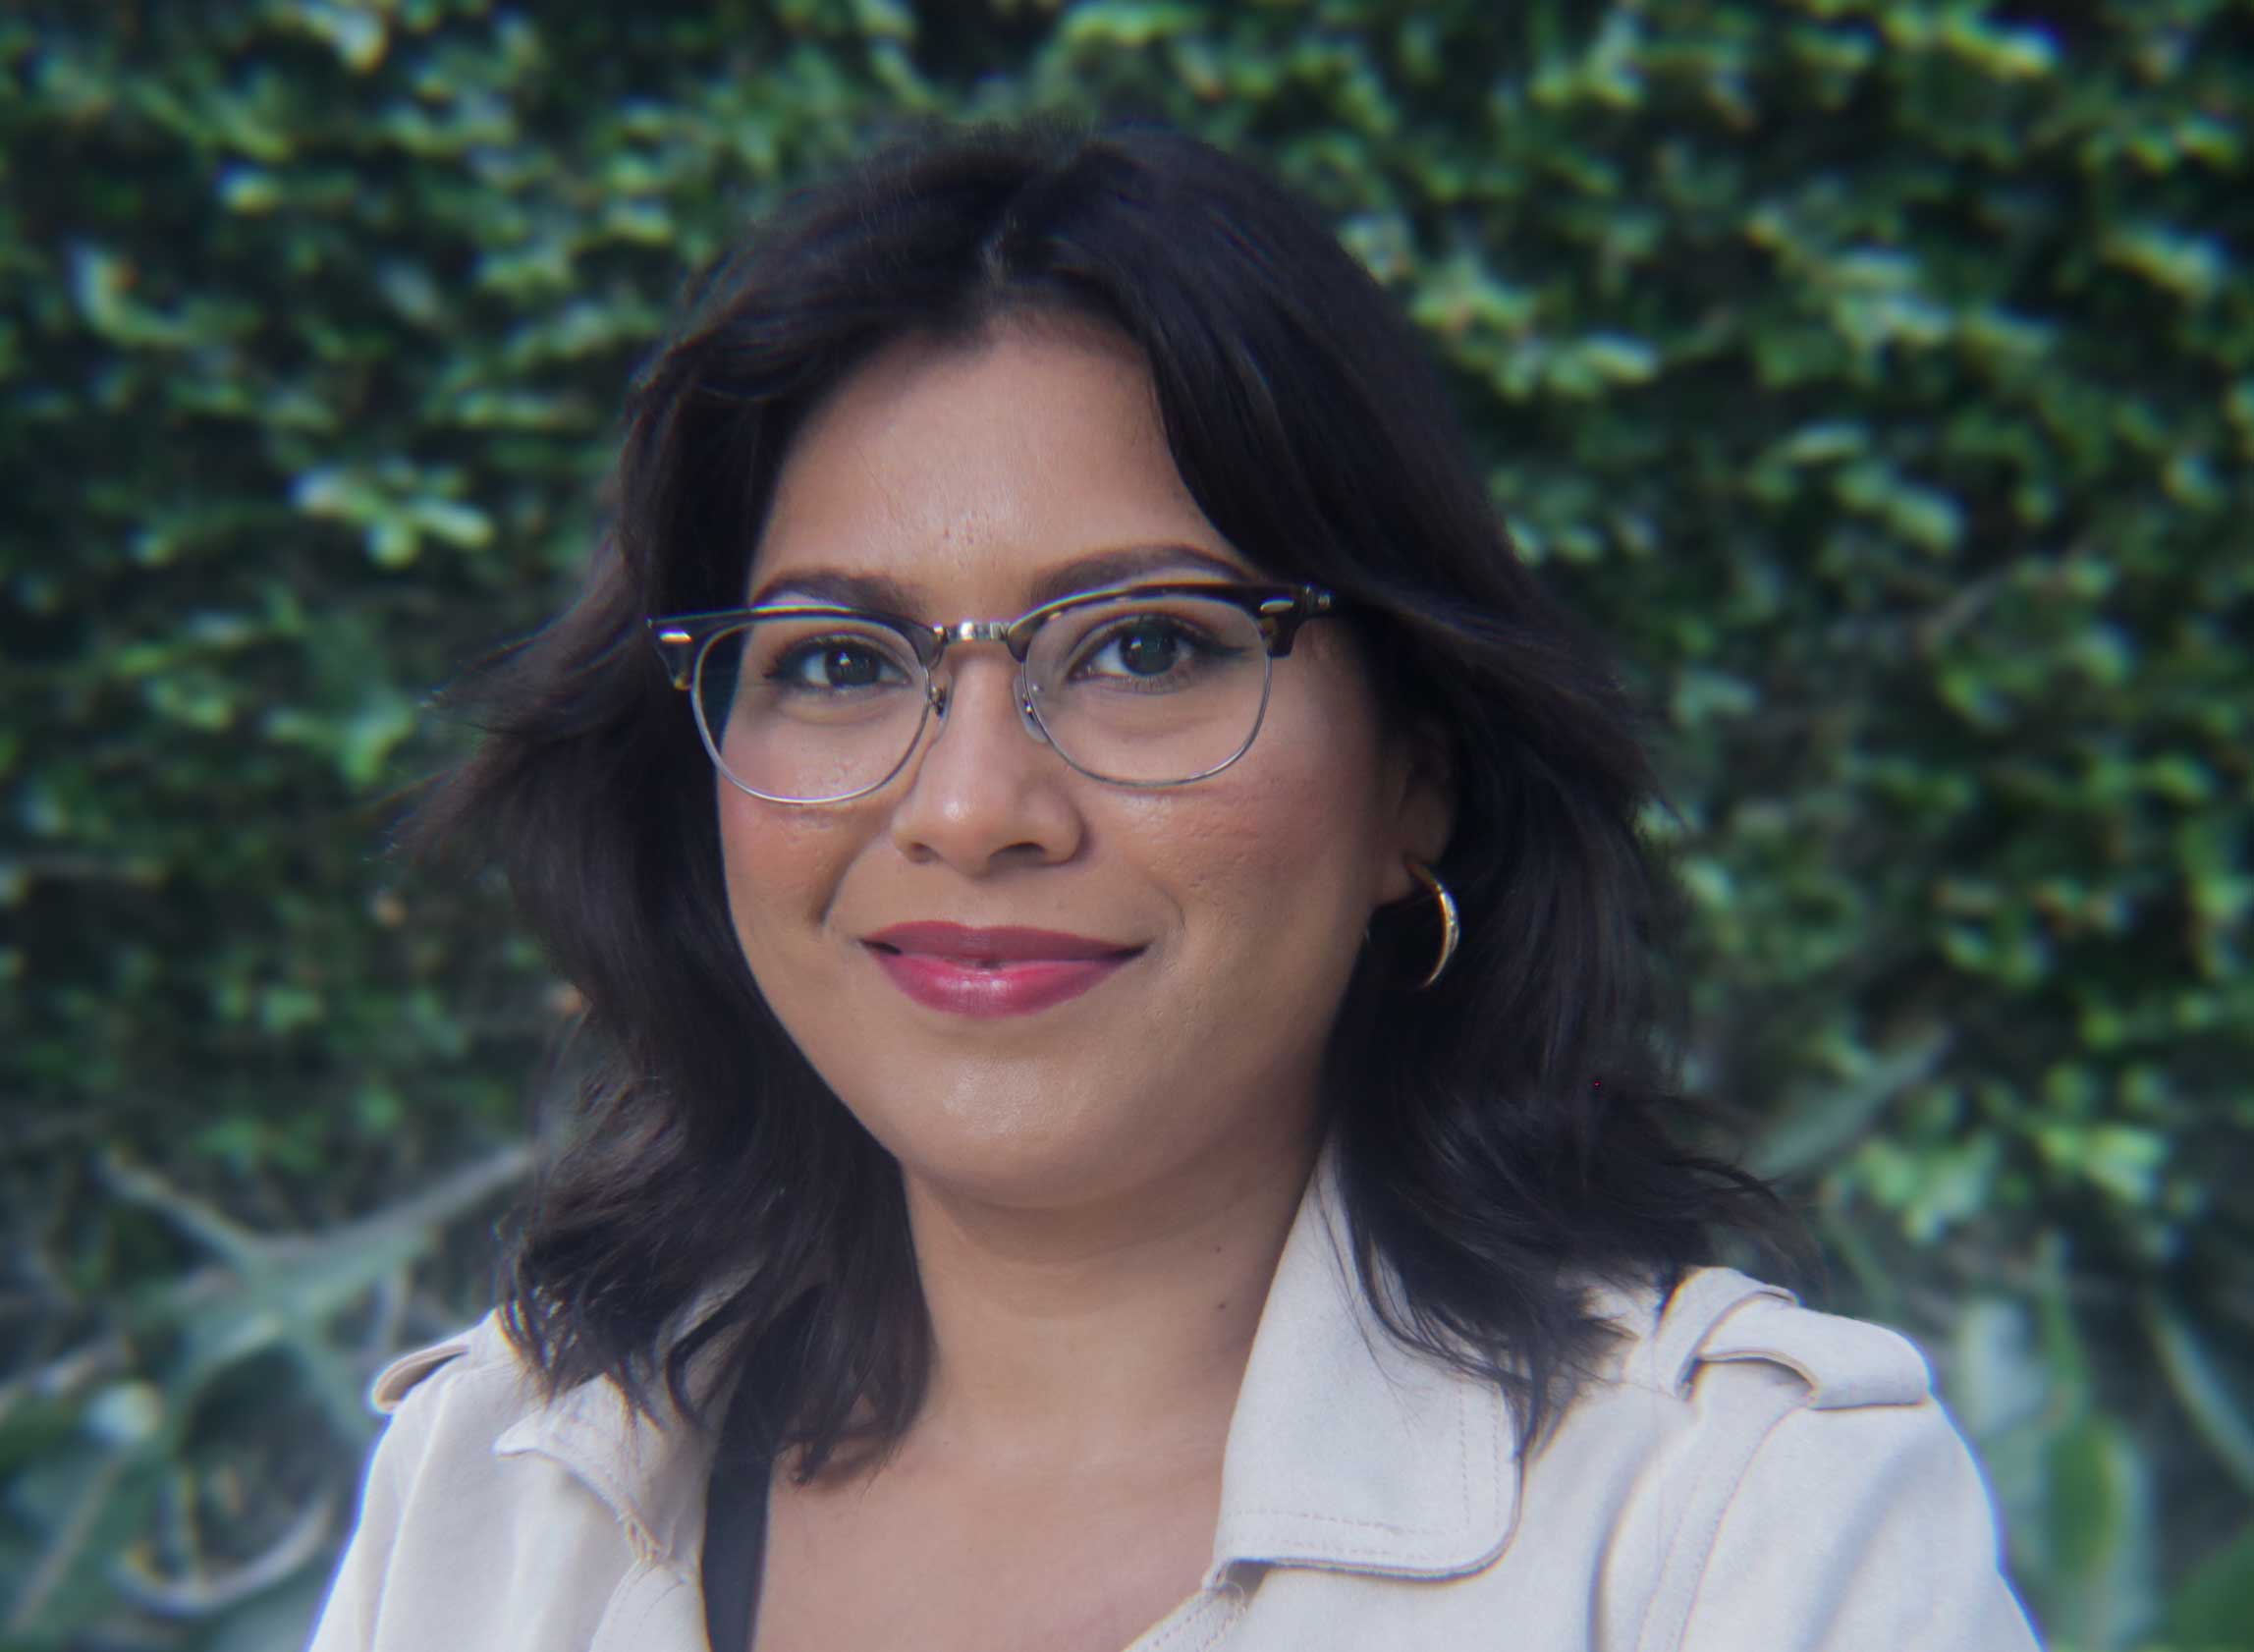 Hispanic woman with glasses smiling at camera